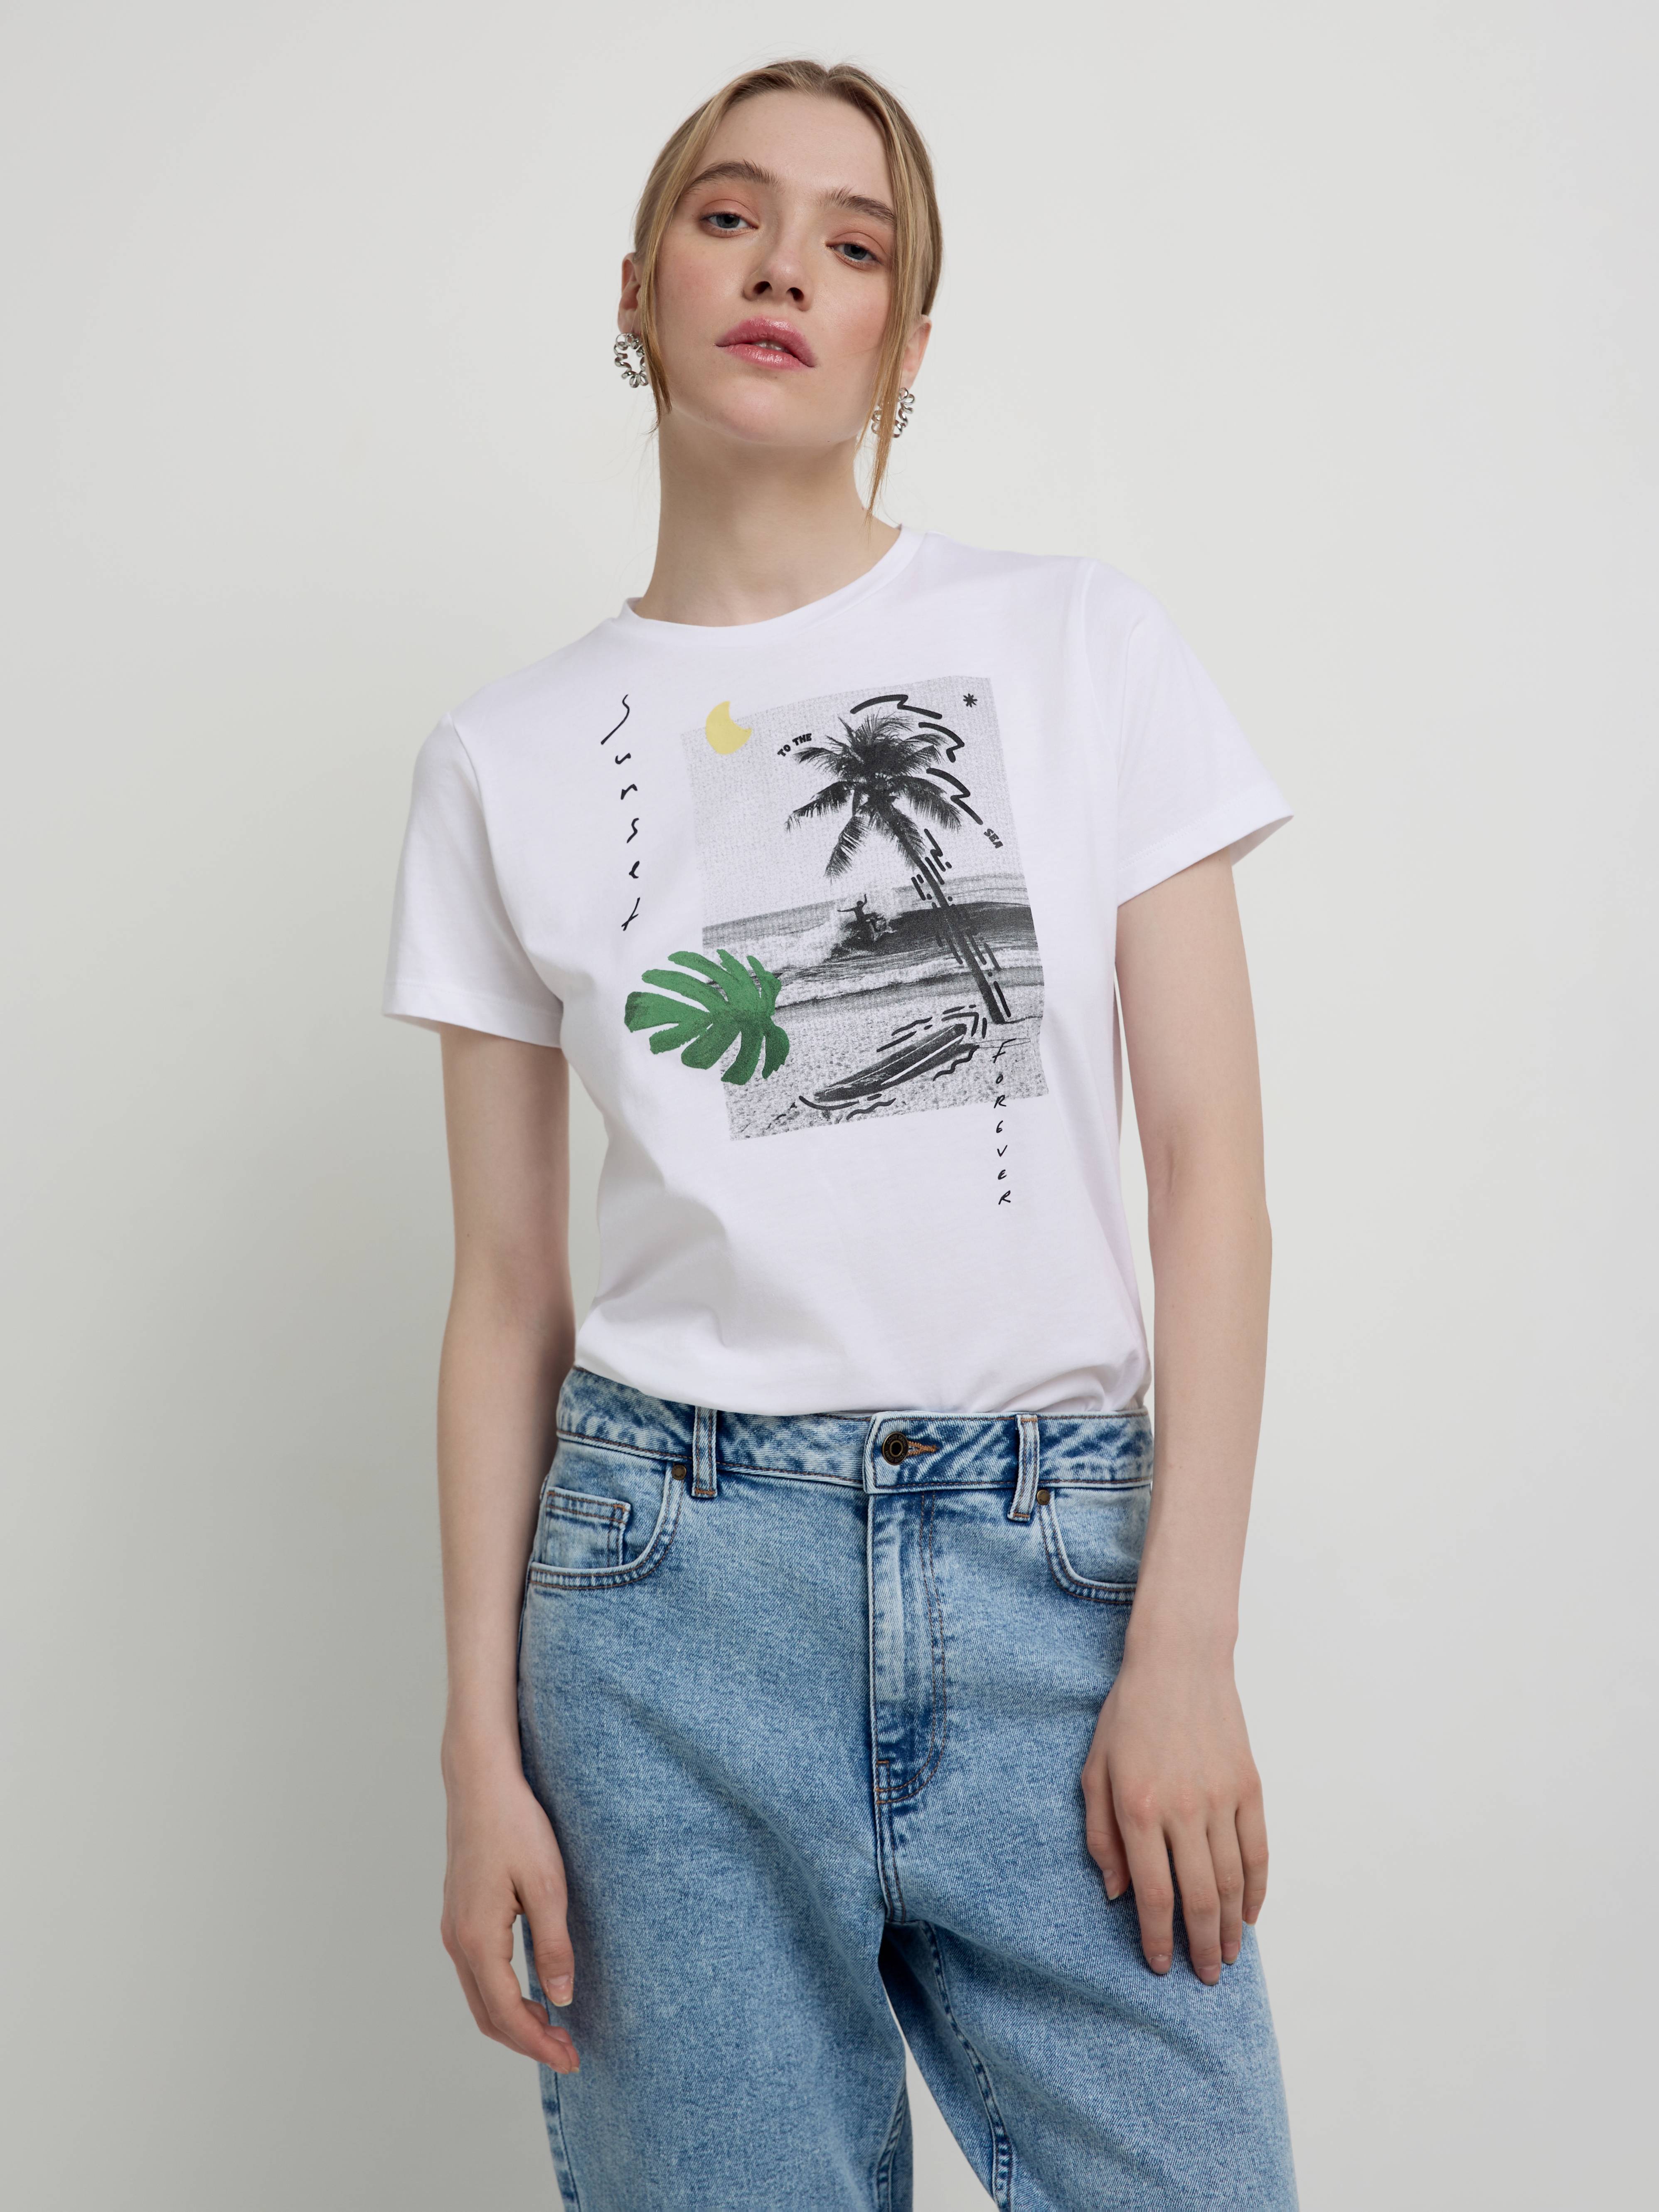 Базовая футболка из хлопка с рисунком «Sunset» LD 2122 Conte ⭐️, цвет white, размер 170-100/l - фото 1